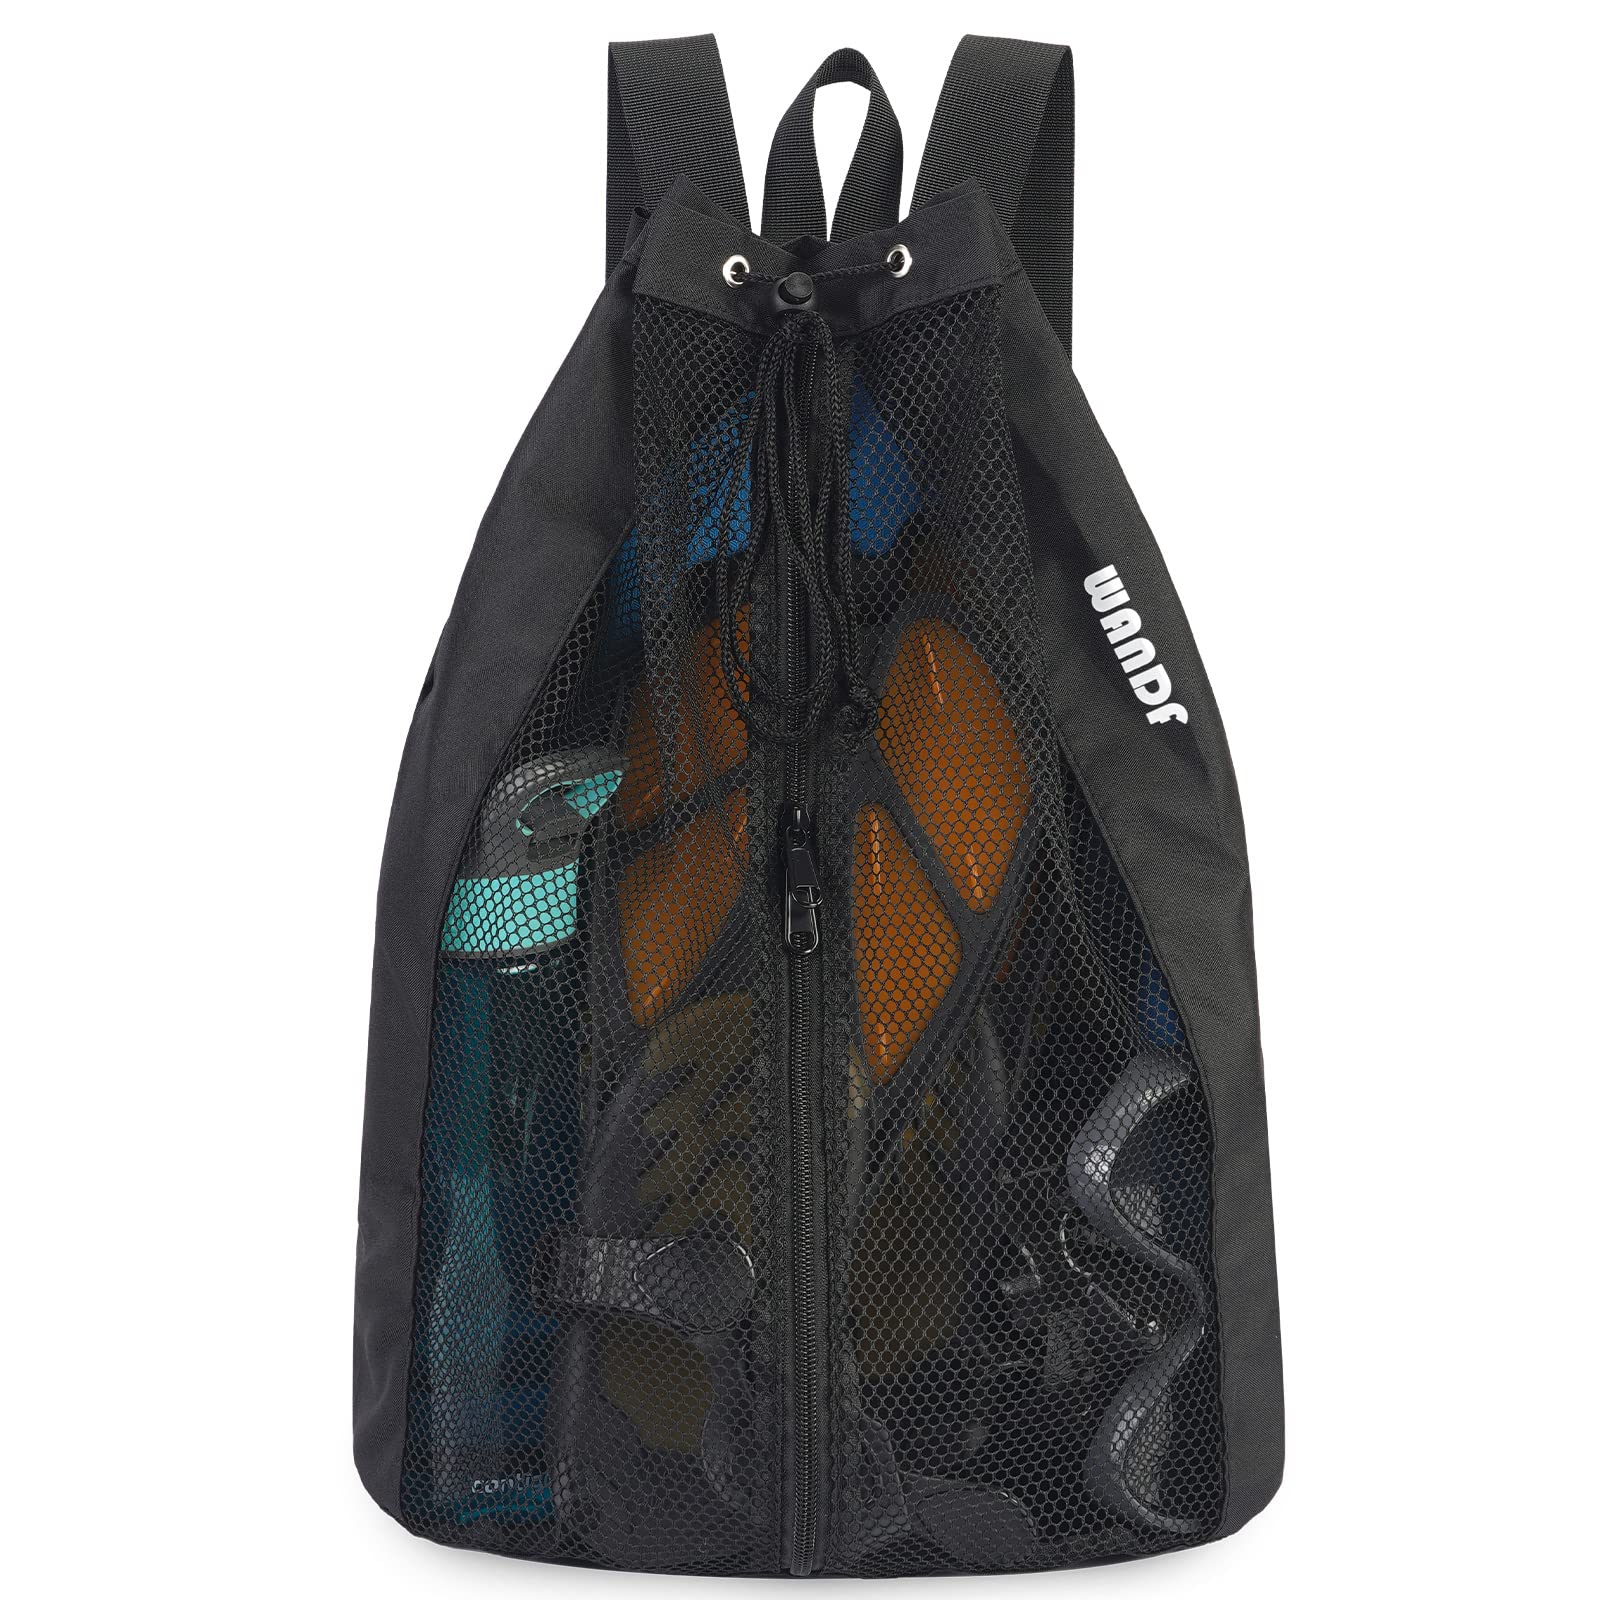 Speedo Unisex Adult Deluxe Ventilation Mesh Bag - Navy, One Size :  Amazon.se: Sports & Outdoors